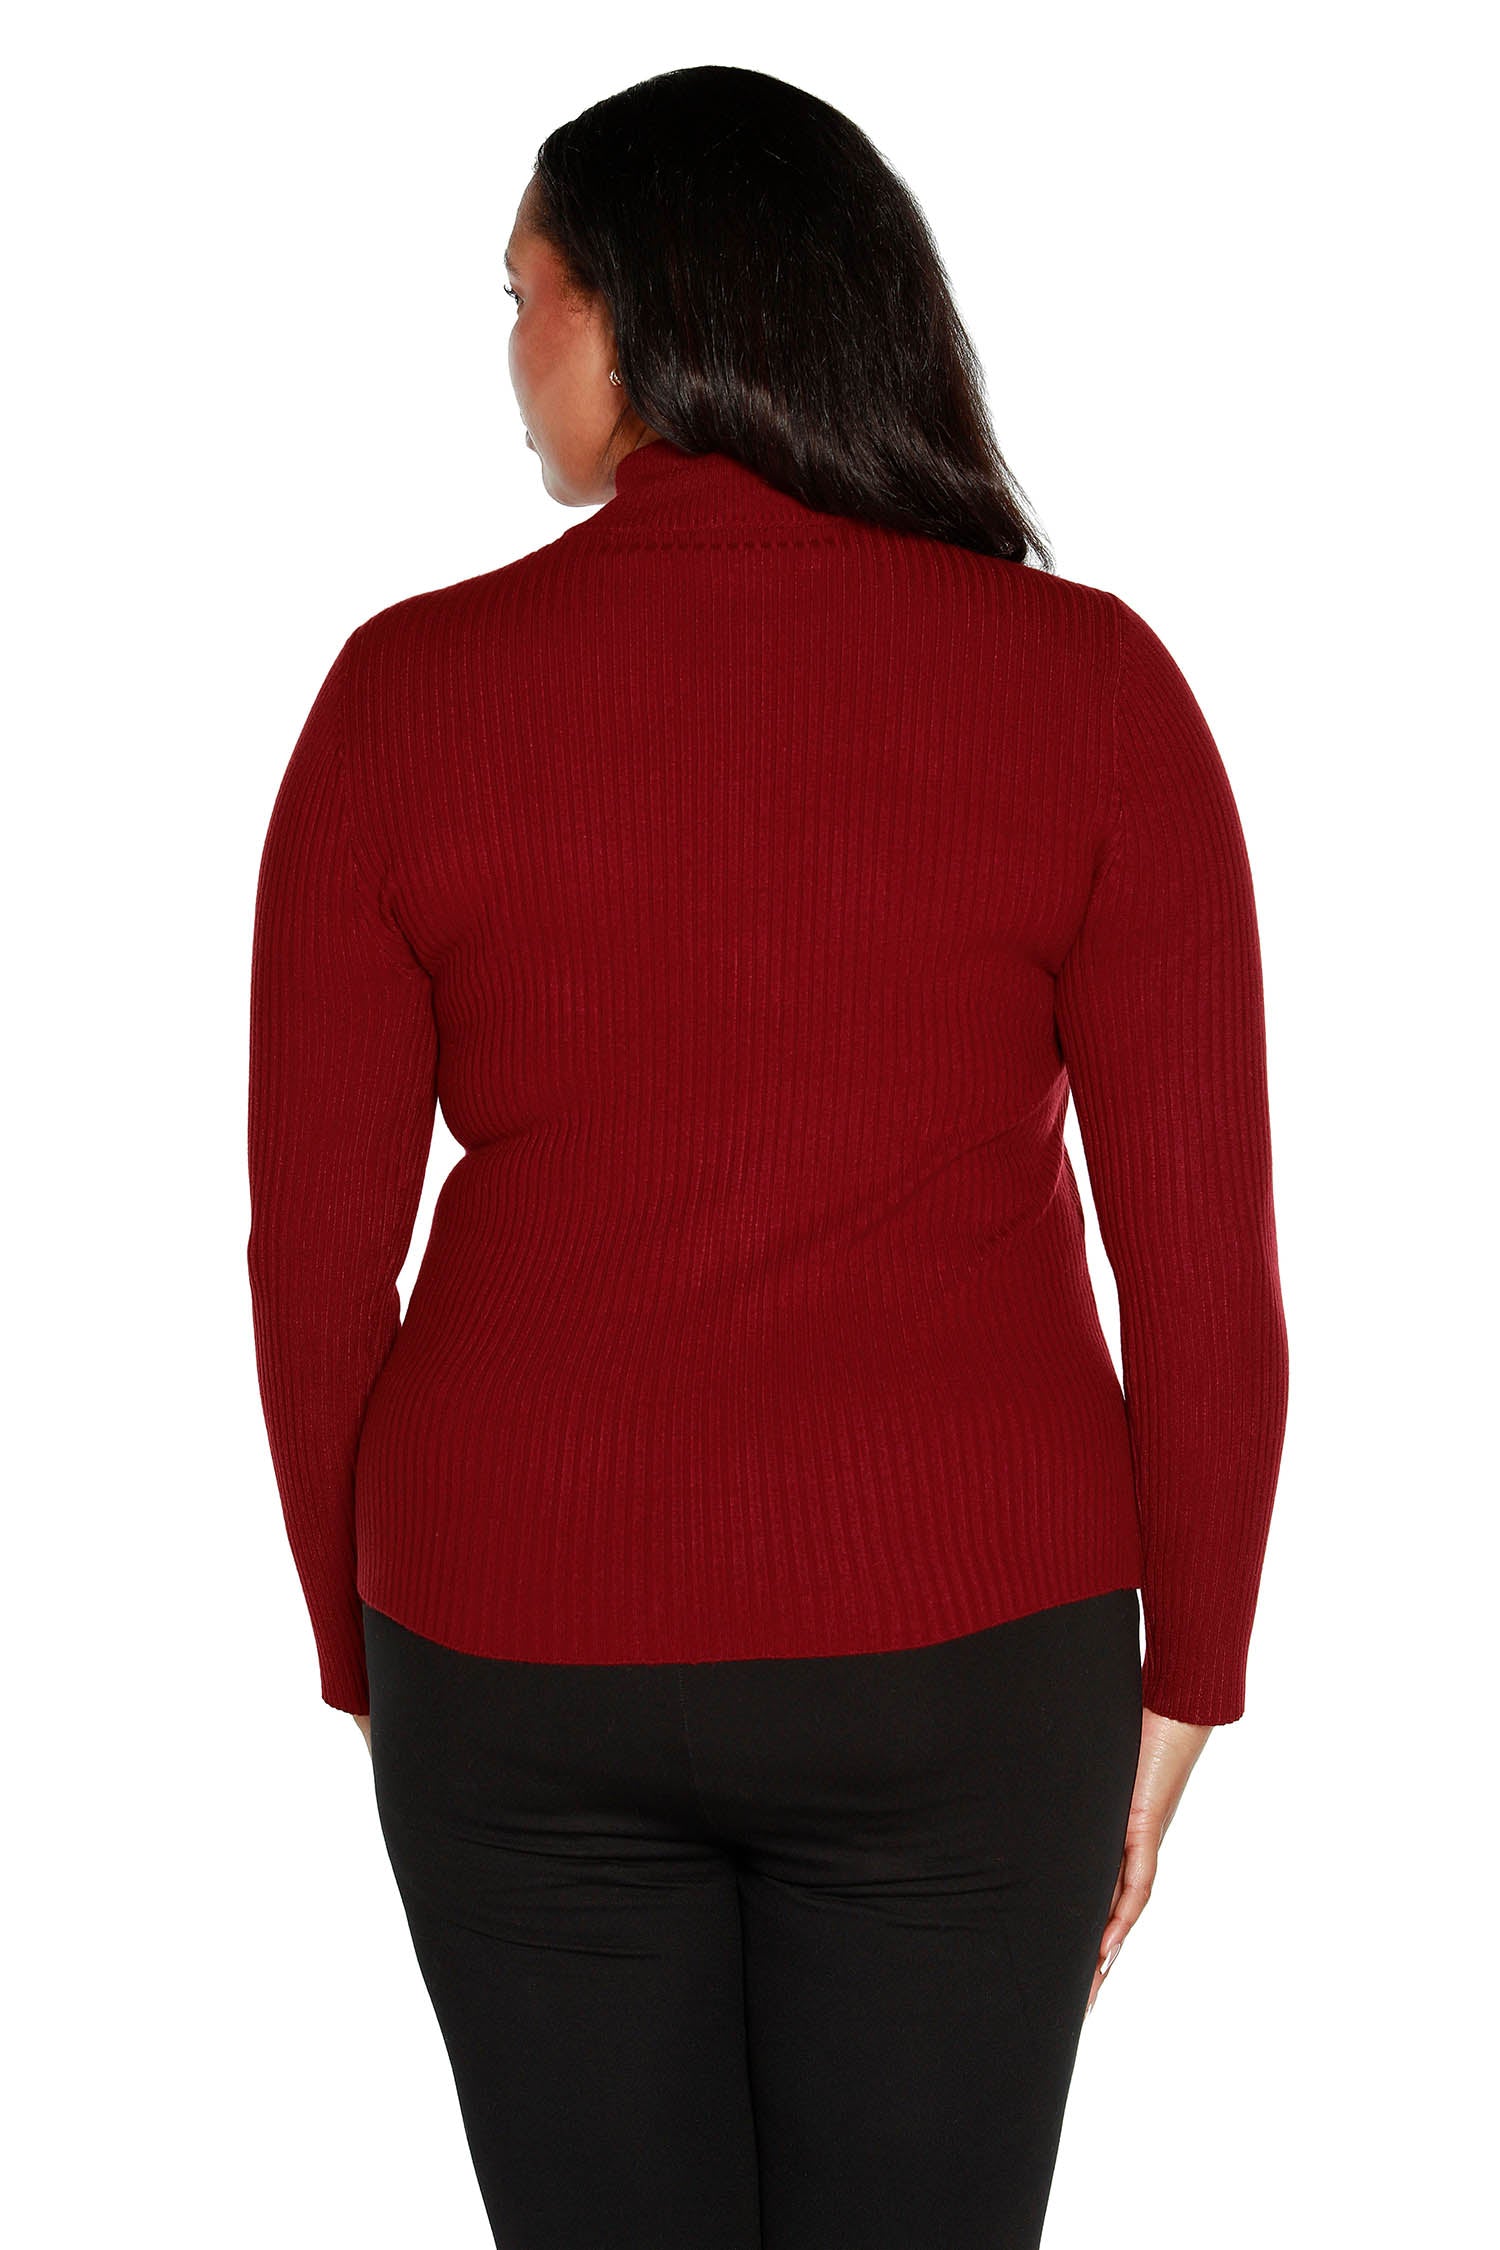 Women's Long Sleeve Mock Neck Ribbed Sweater with Diamond Zipper | Curvy